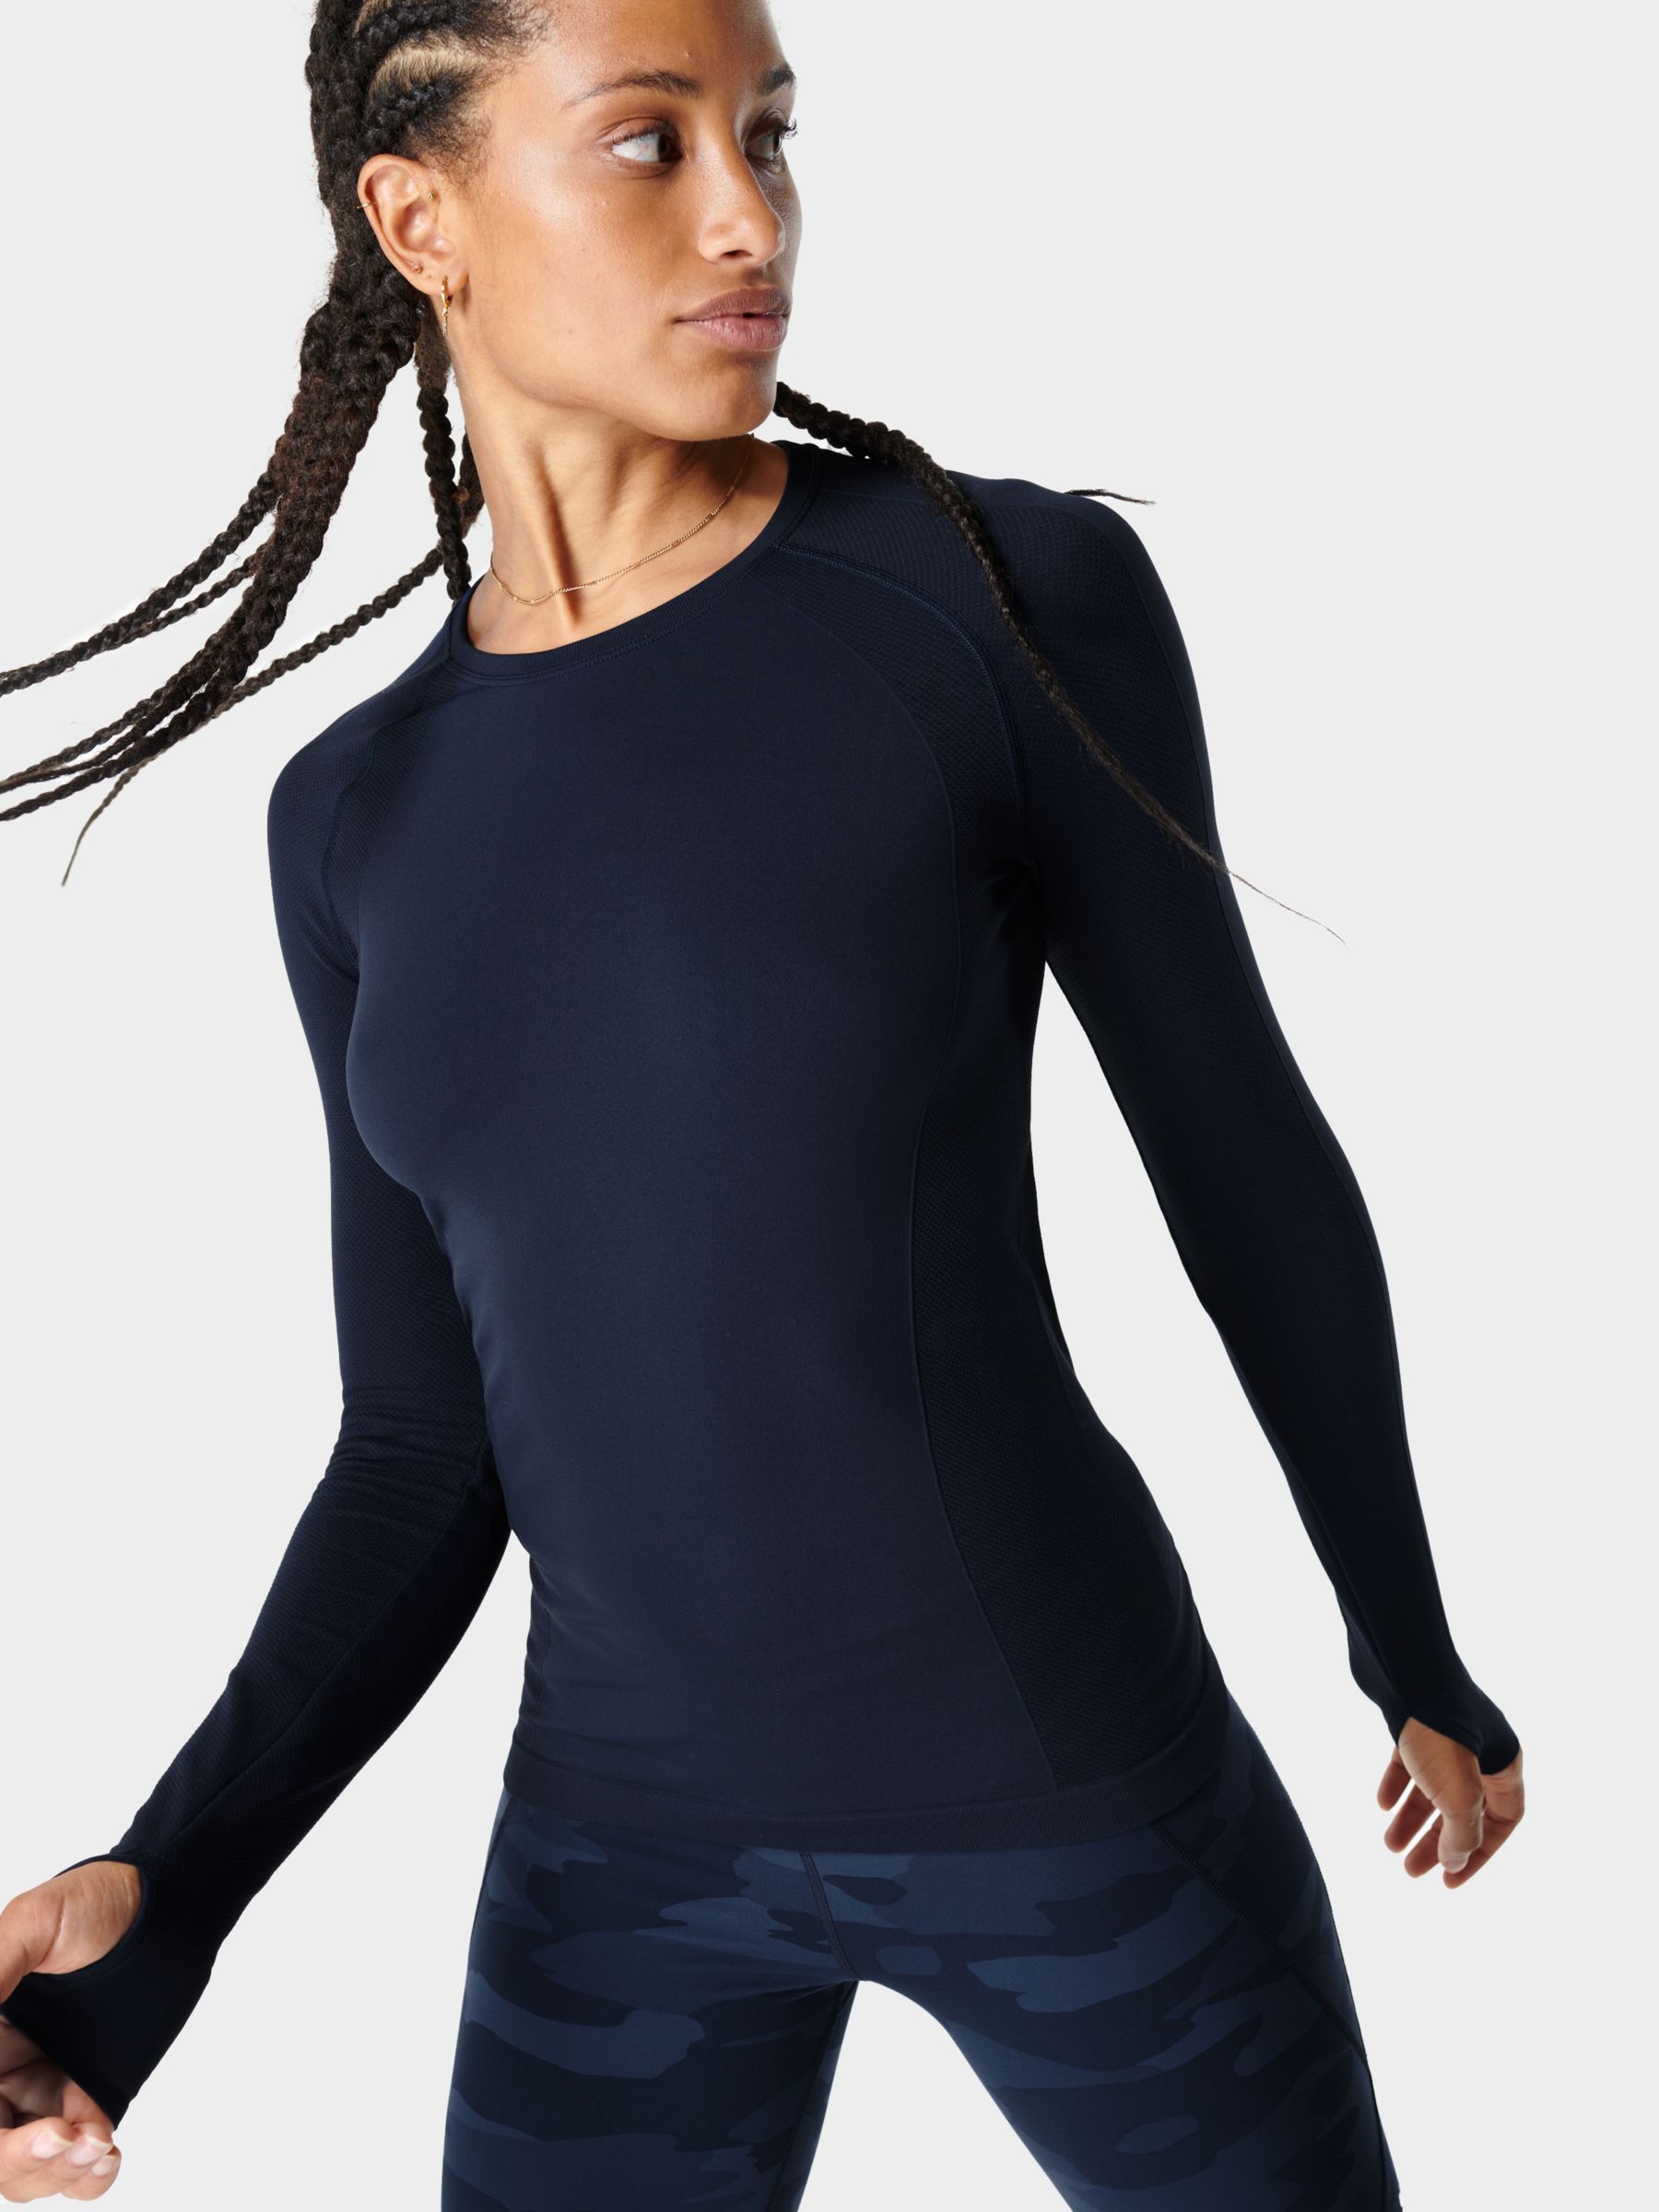 Sweaty Betty Athlete Seamless Long Sleeve Gym Top, Navy Blue, XS